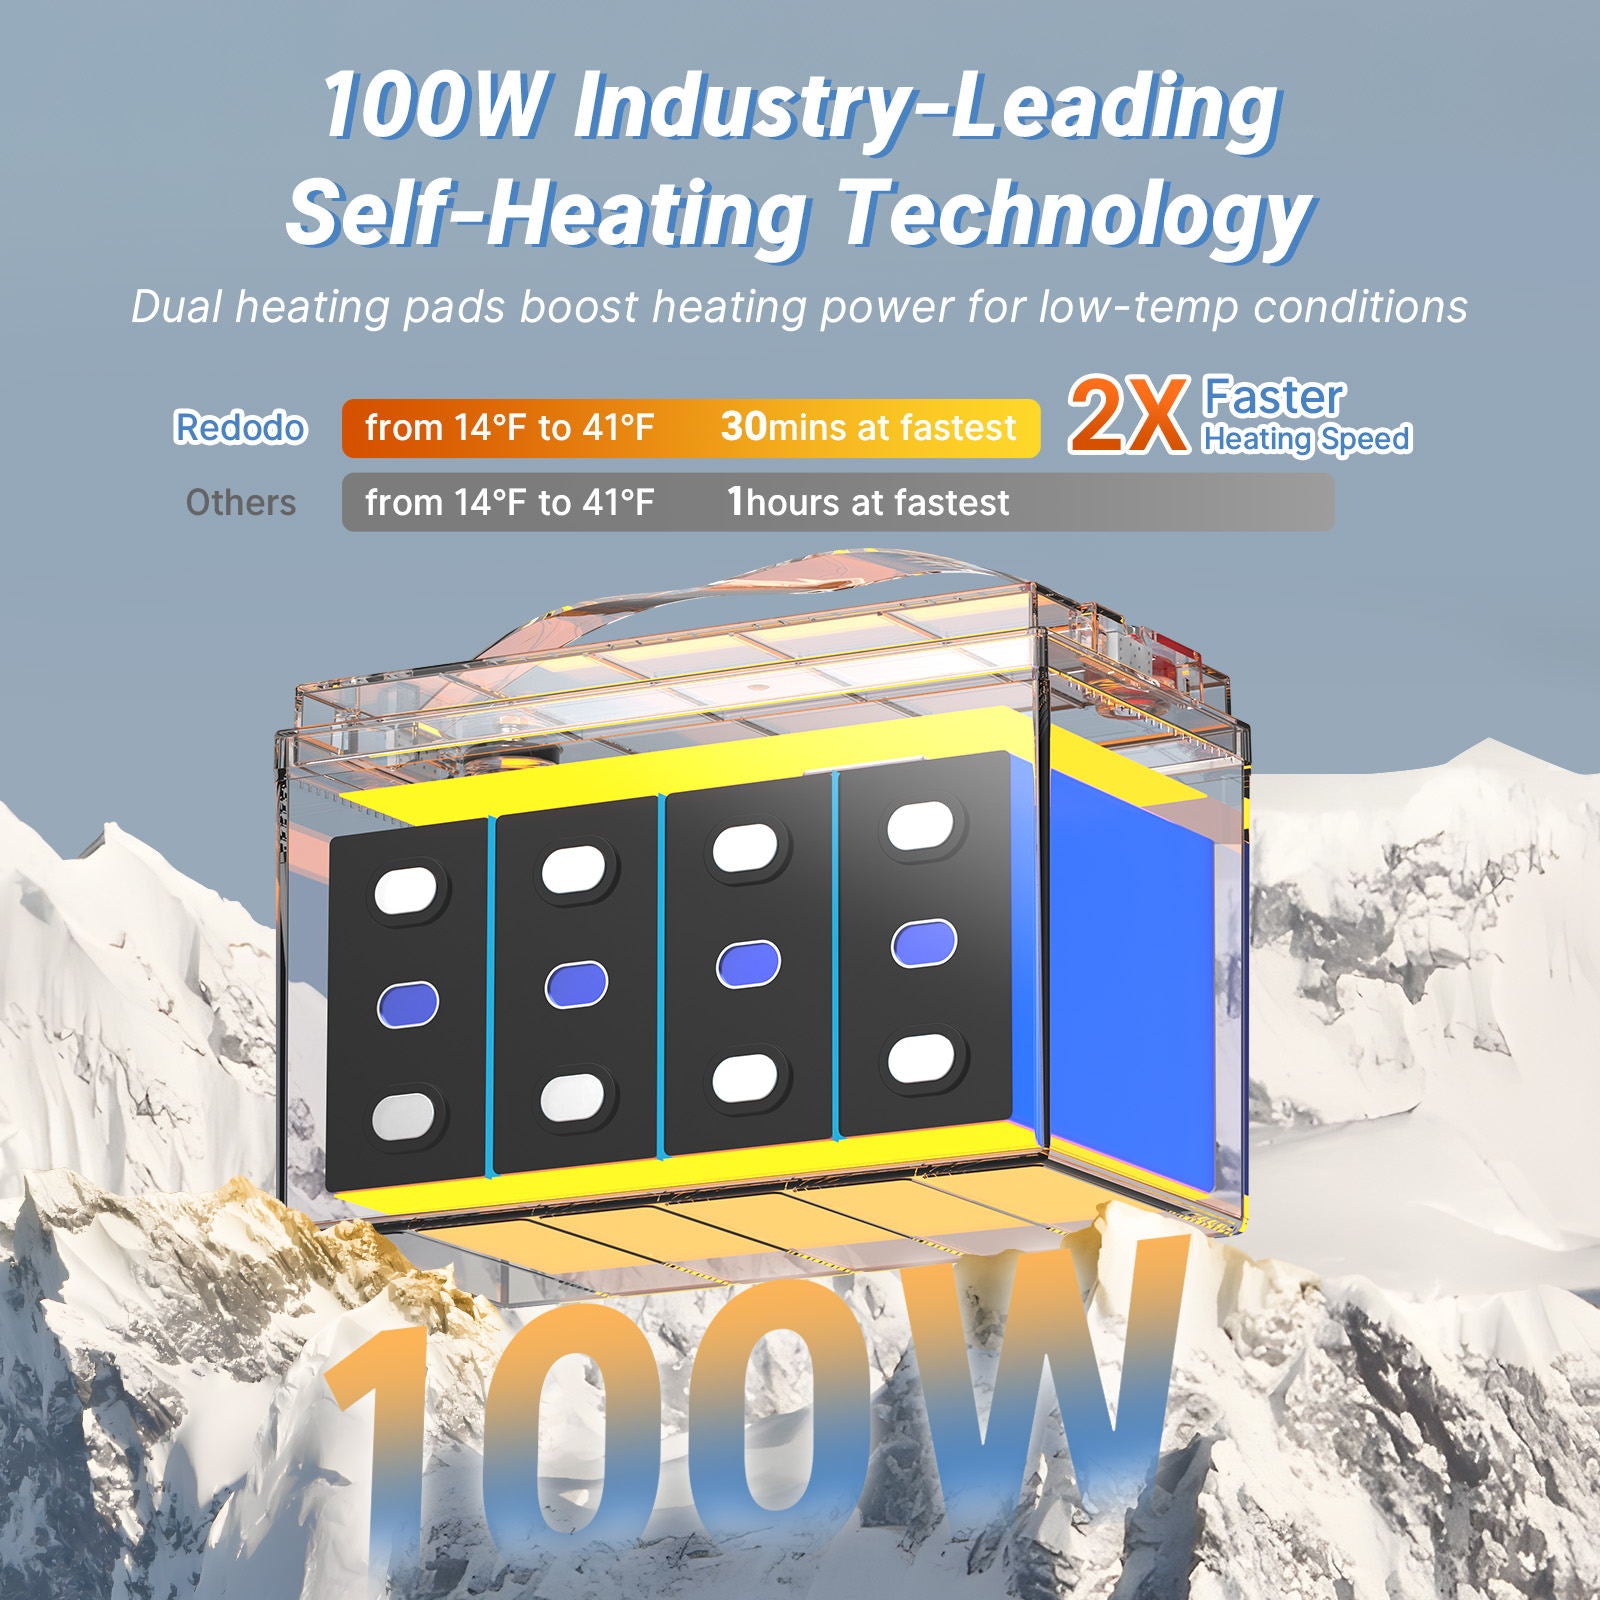 【As low as $323】【Self-Heating】Redodo 12V 100Ah LiFePO4 Battery Redodo Power